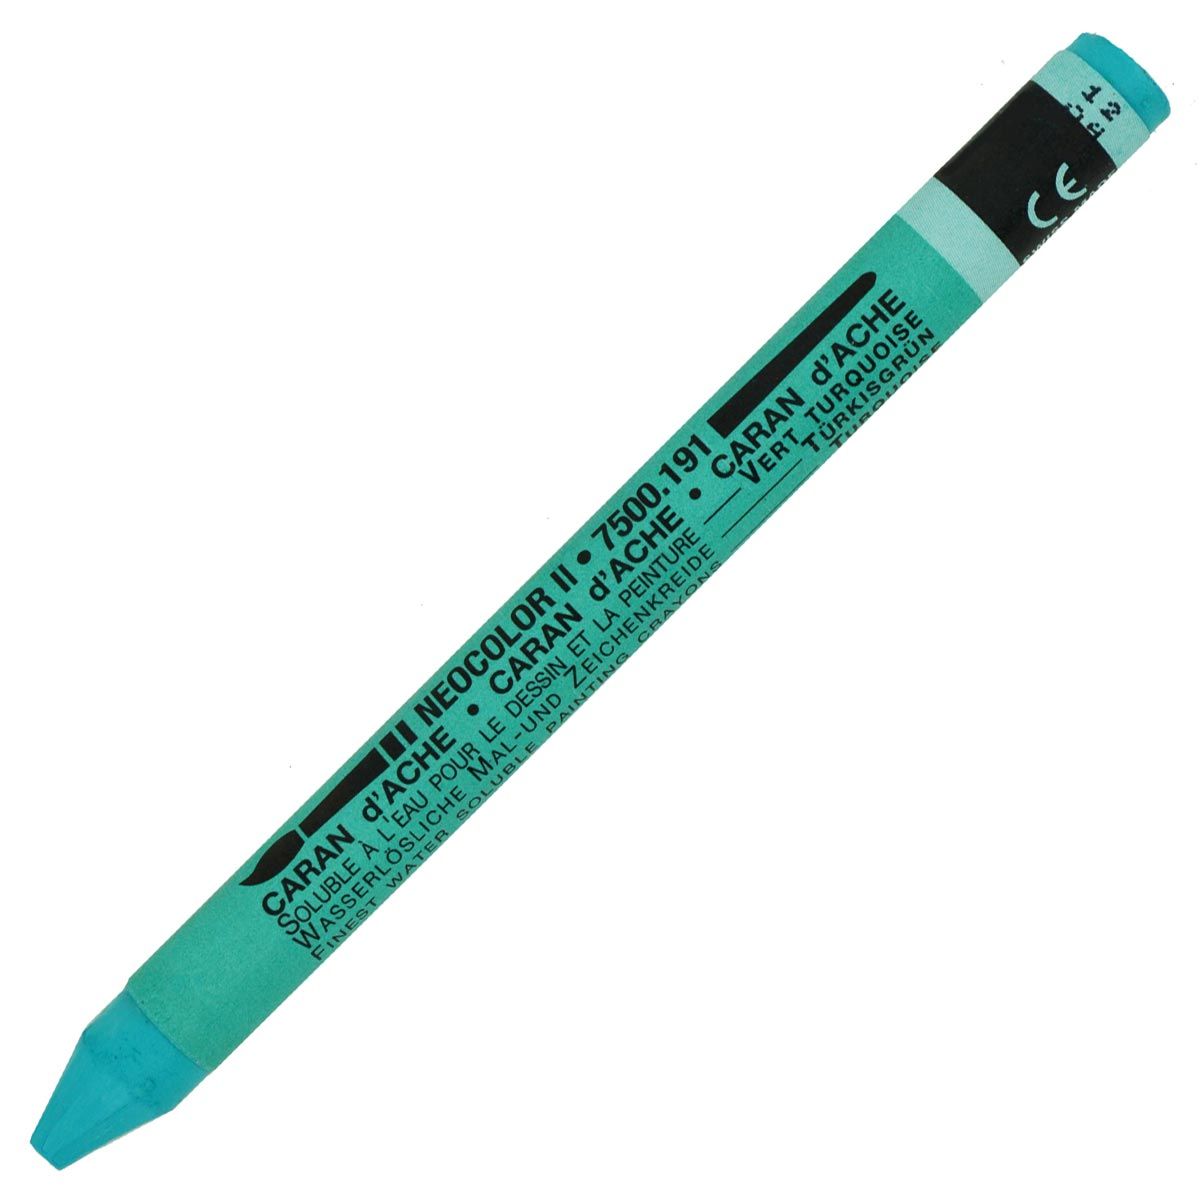 Neocolor II Aquarelle Artists’ Crayon - Turquoise Green 191